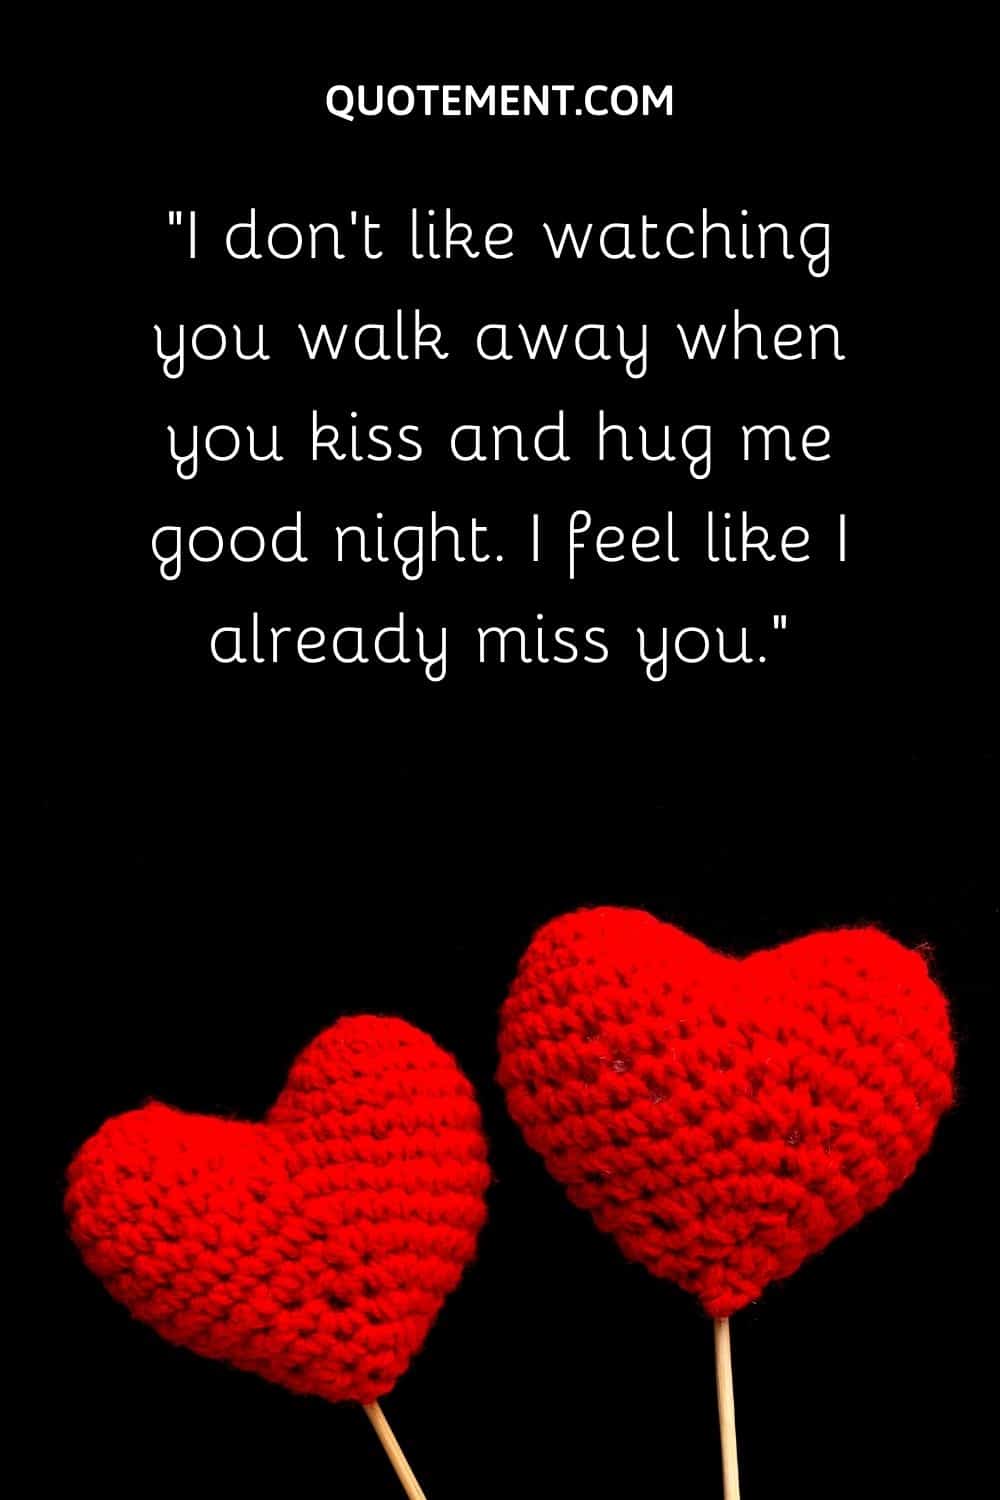 I don't like watching you walk away when you kiss and hug me good night. I feel like I already miss you.